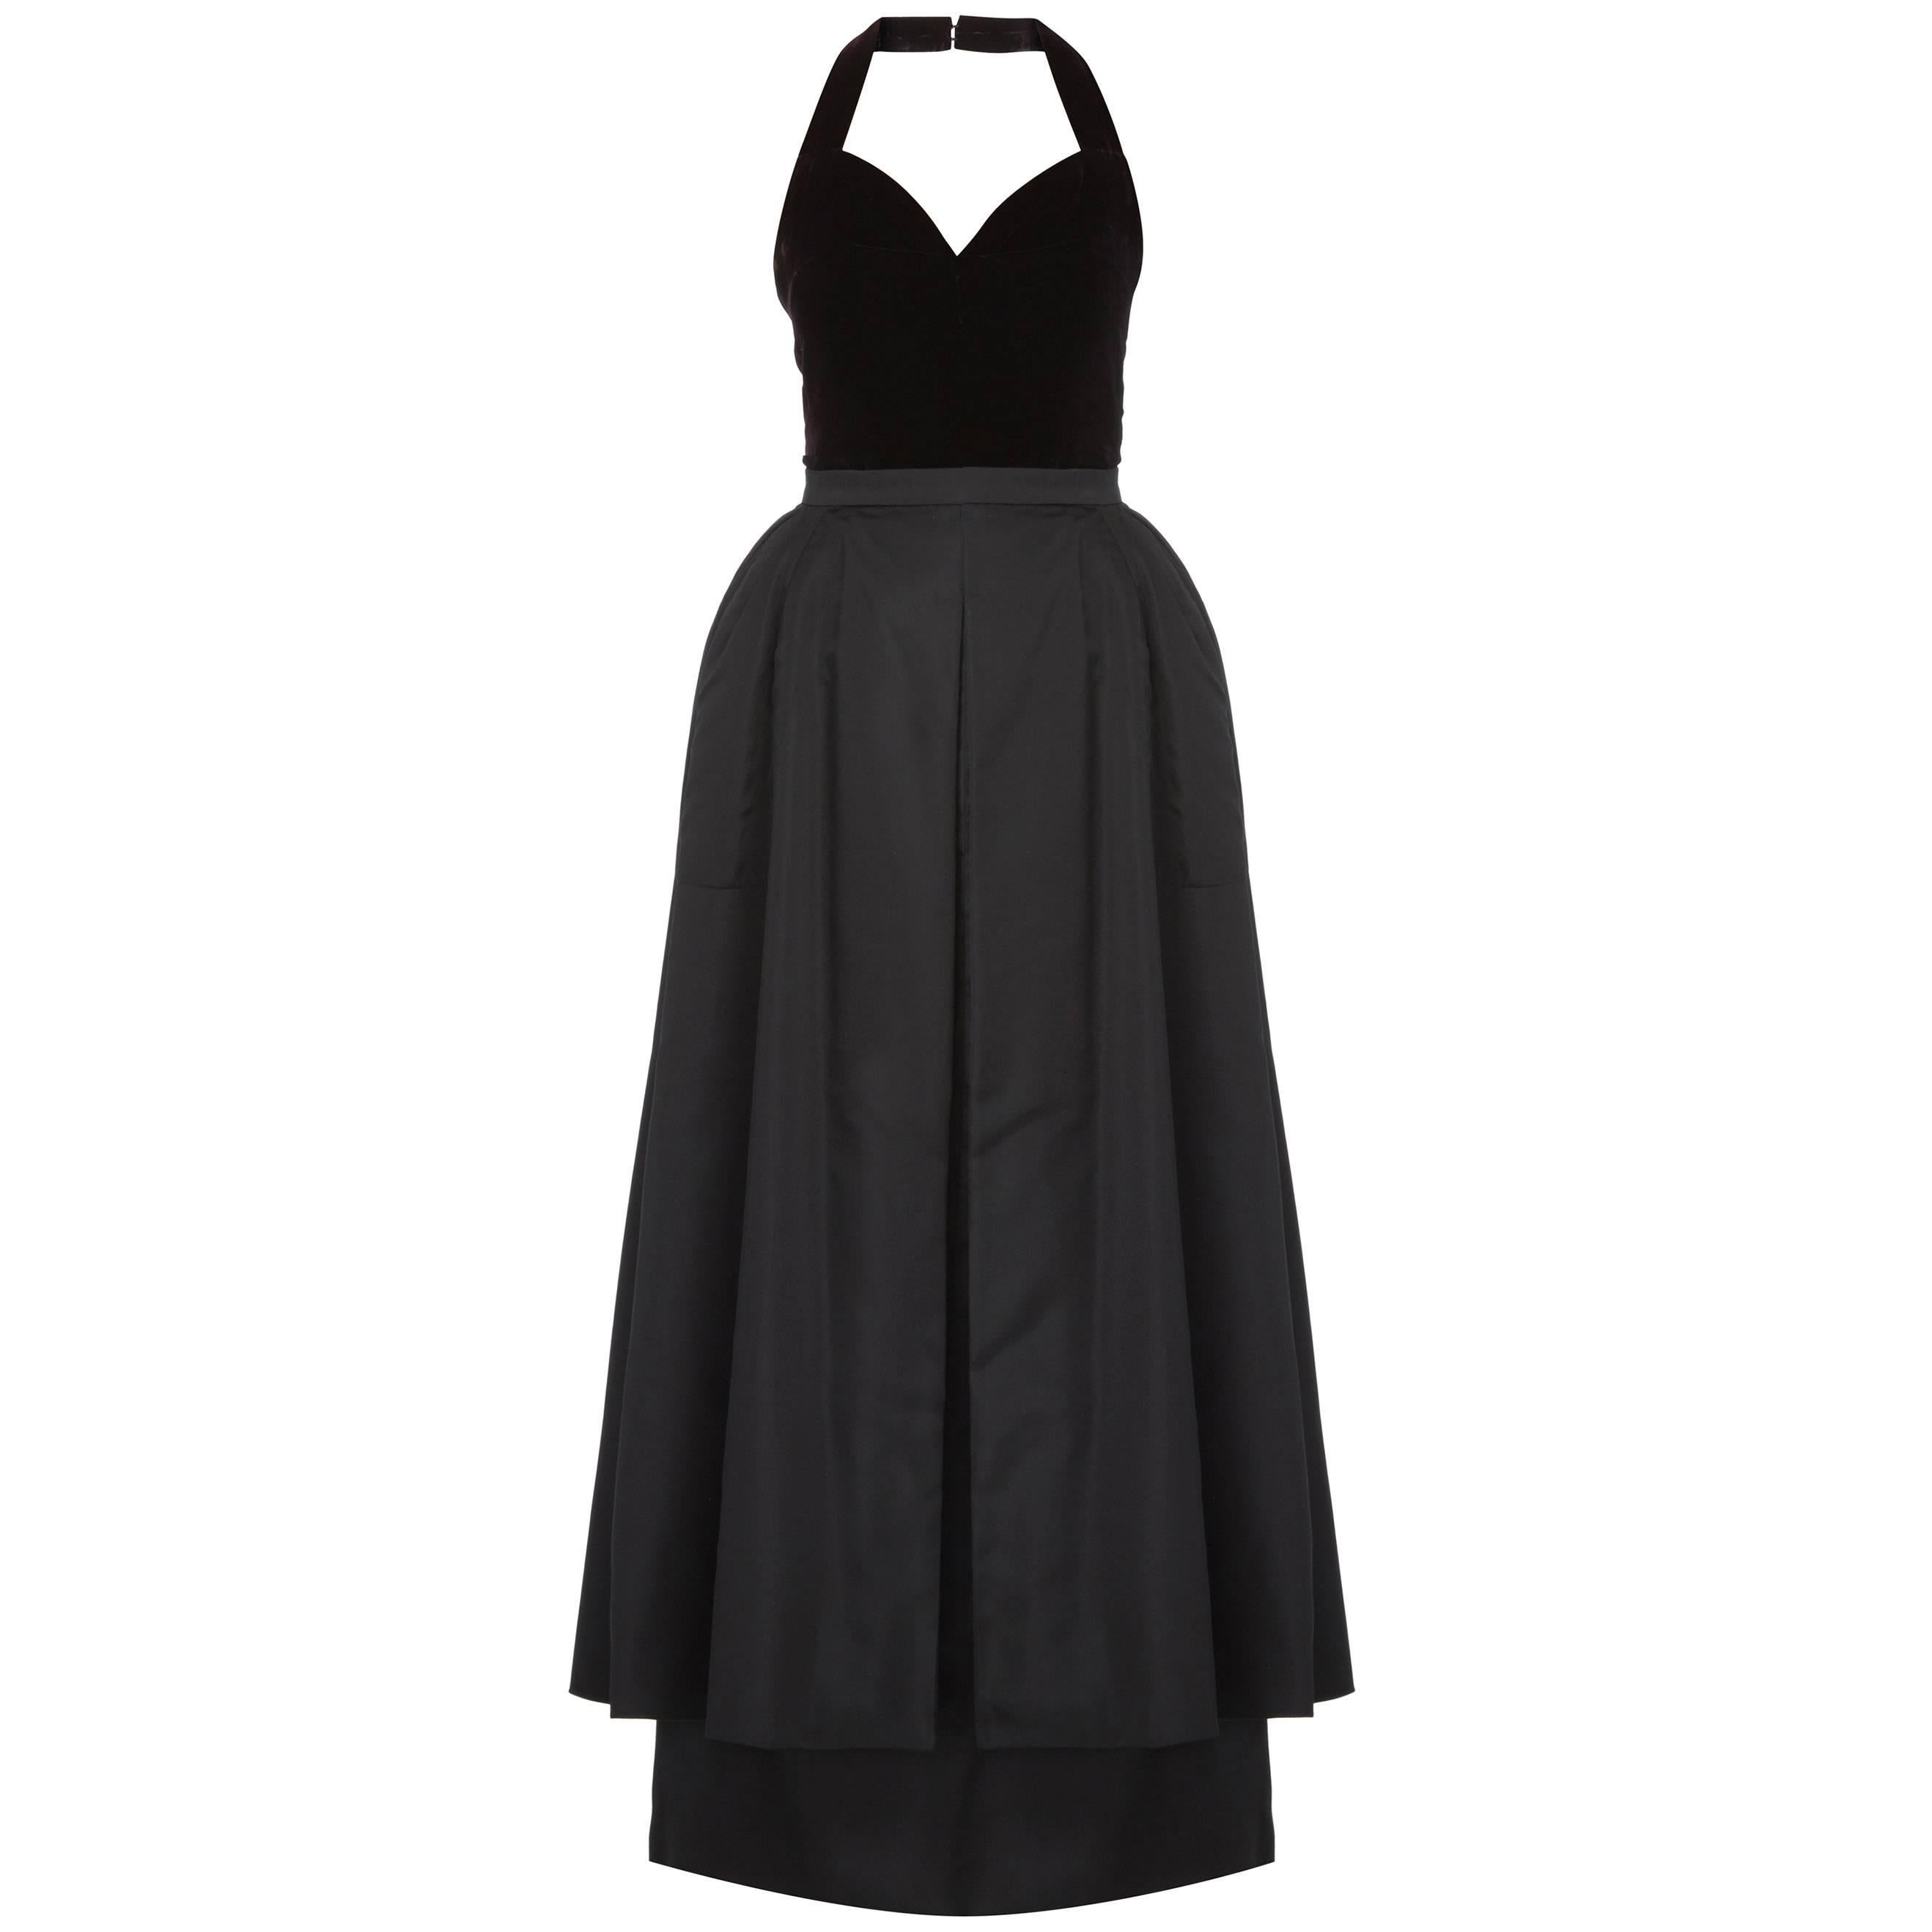 Jacques Fath haute couture black skirt & top, circa 1953 For Sale